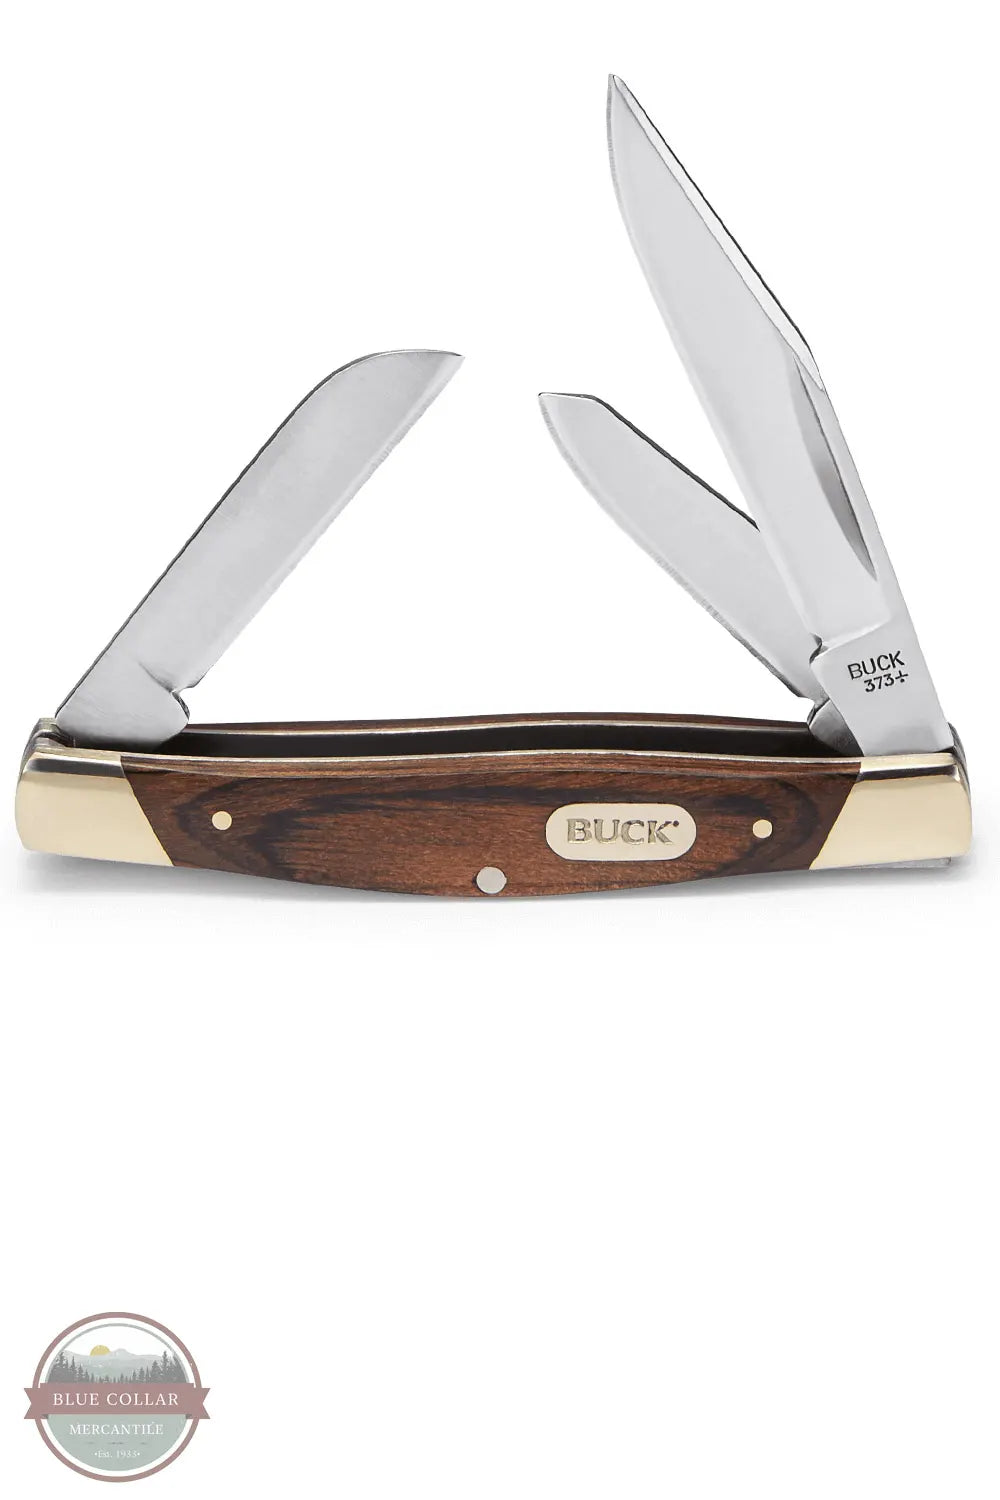 373 Trio Pocket Knife by Buck Knives 0373BRS-B all 3 blades